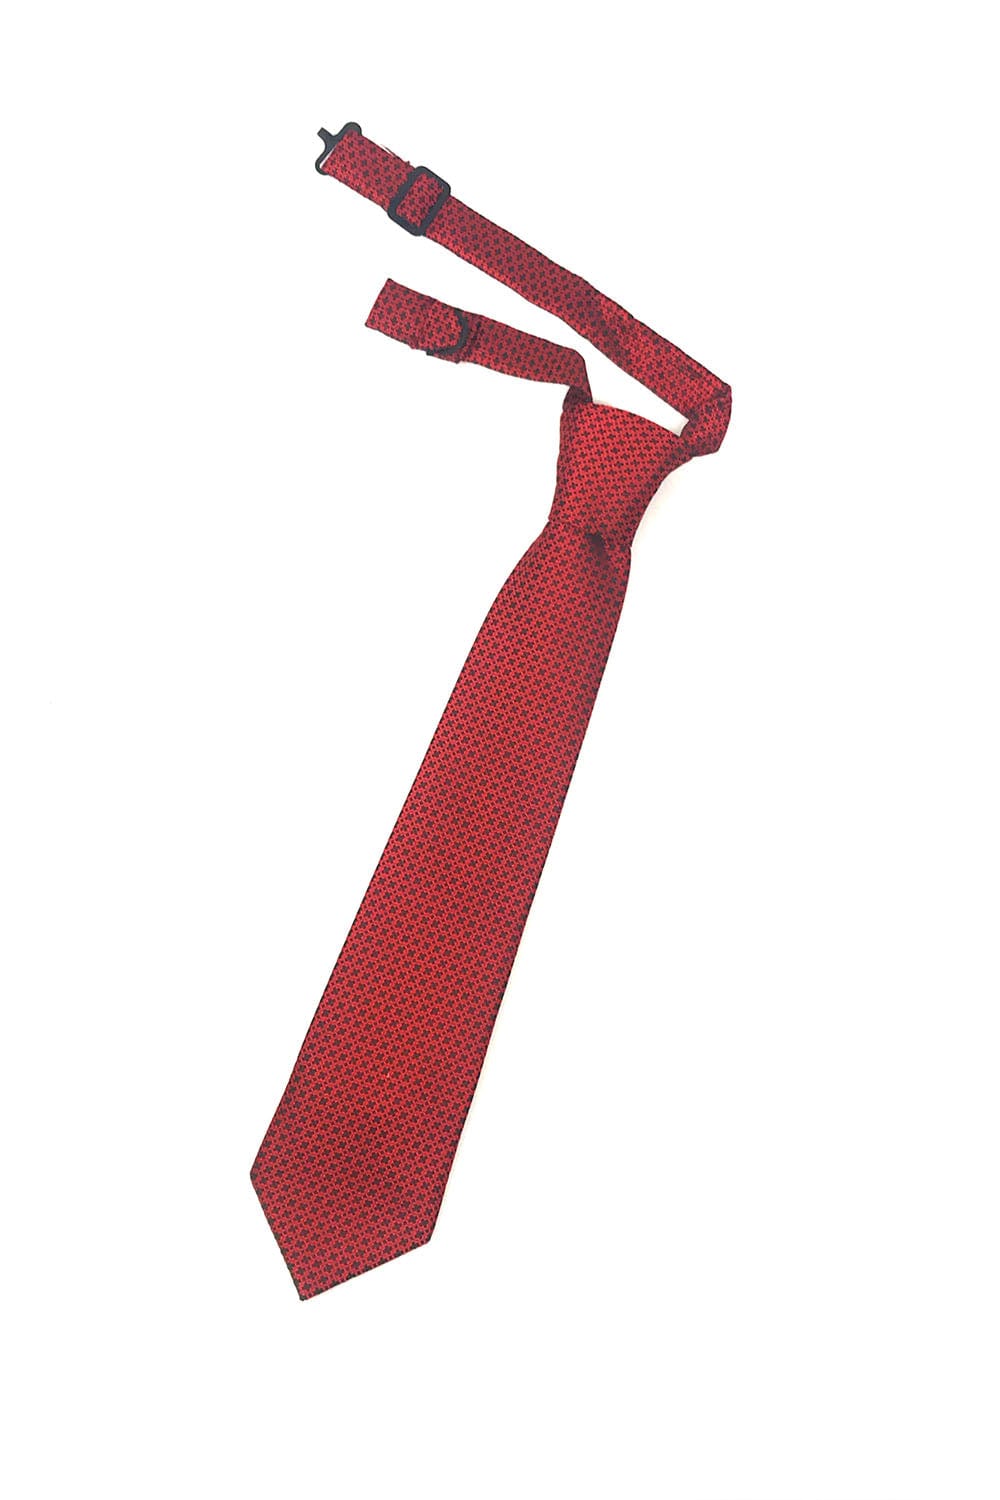 Cardi Pre-Tied Red Regal Kids Necktie